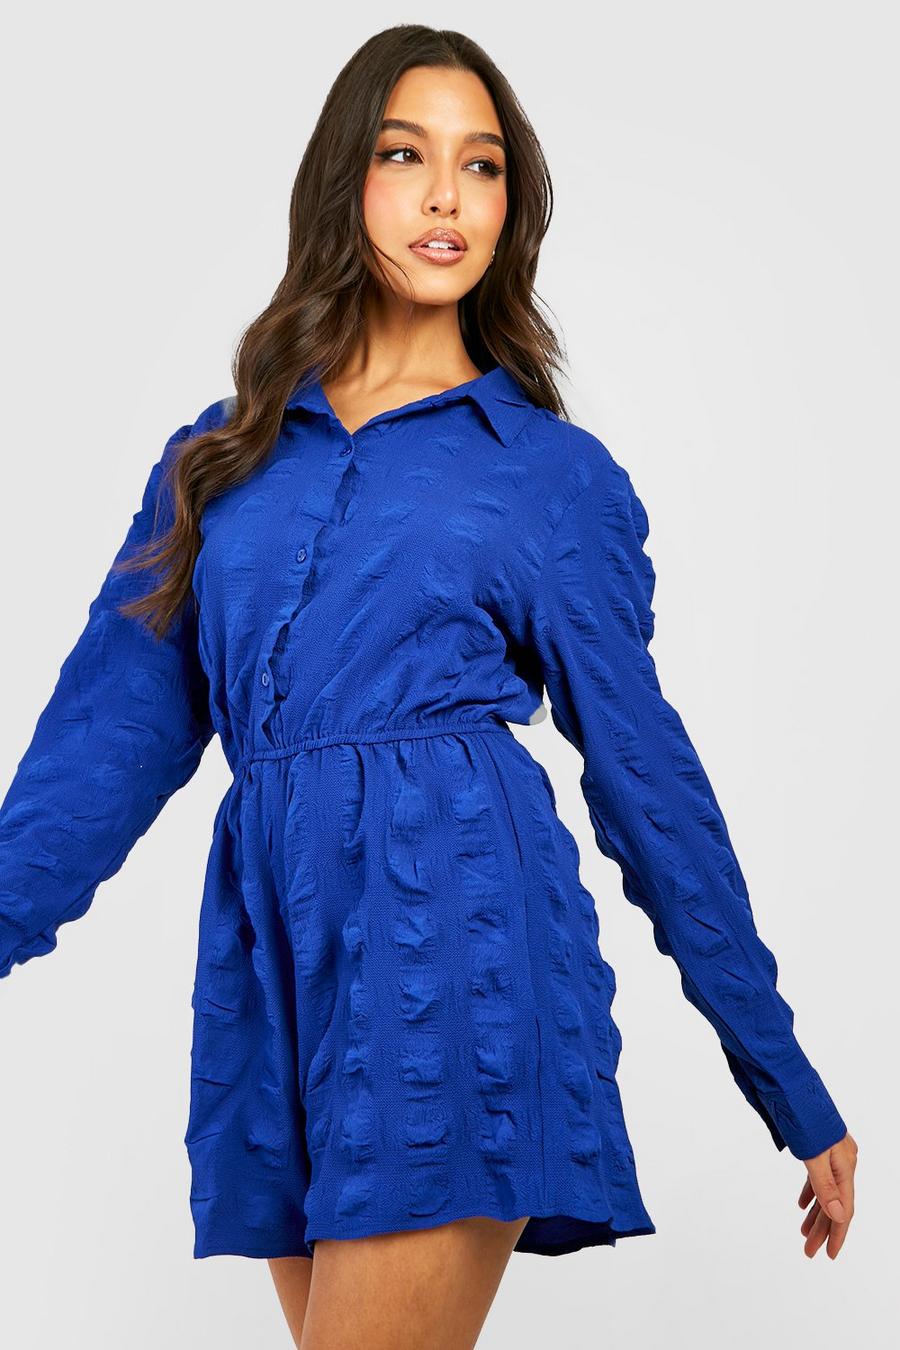 Cobalt blue Crinkle Textured Shirt Playsuit